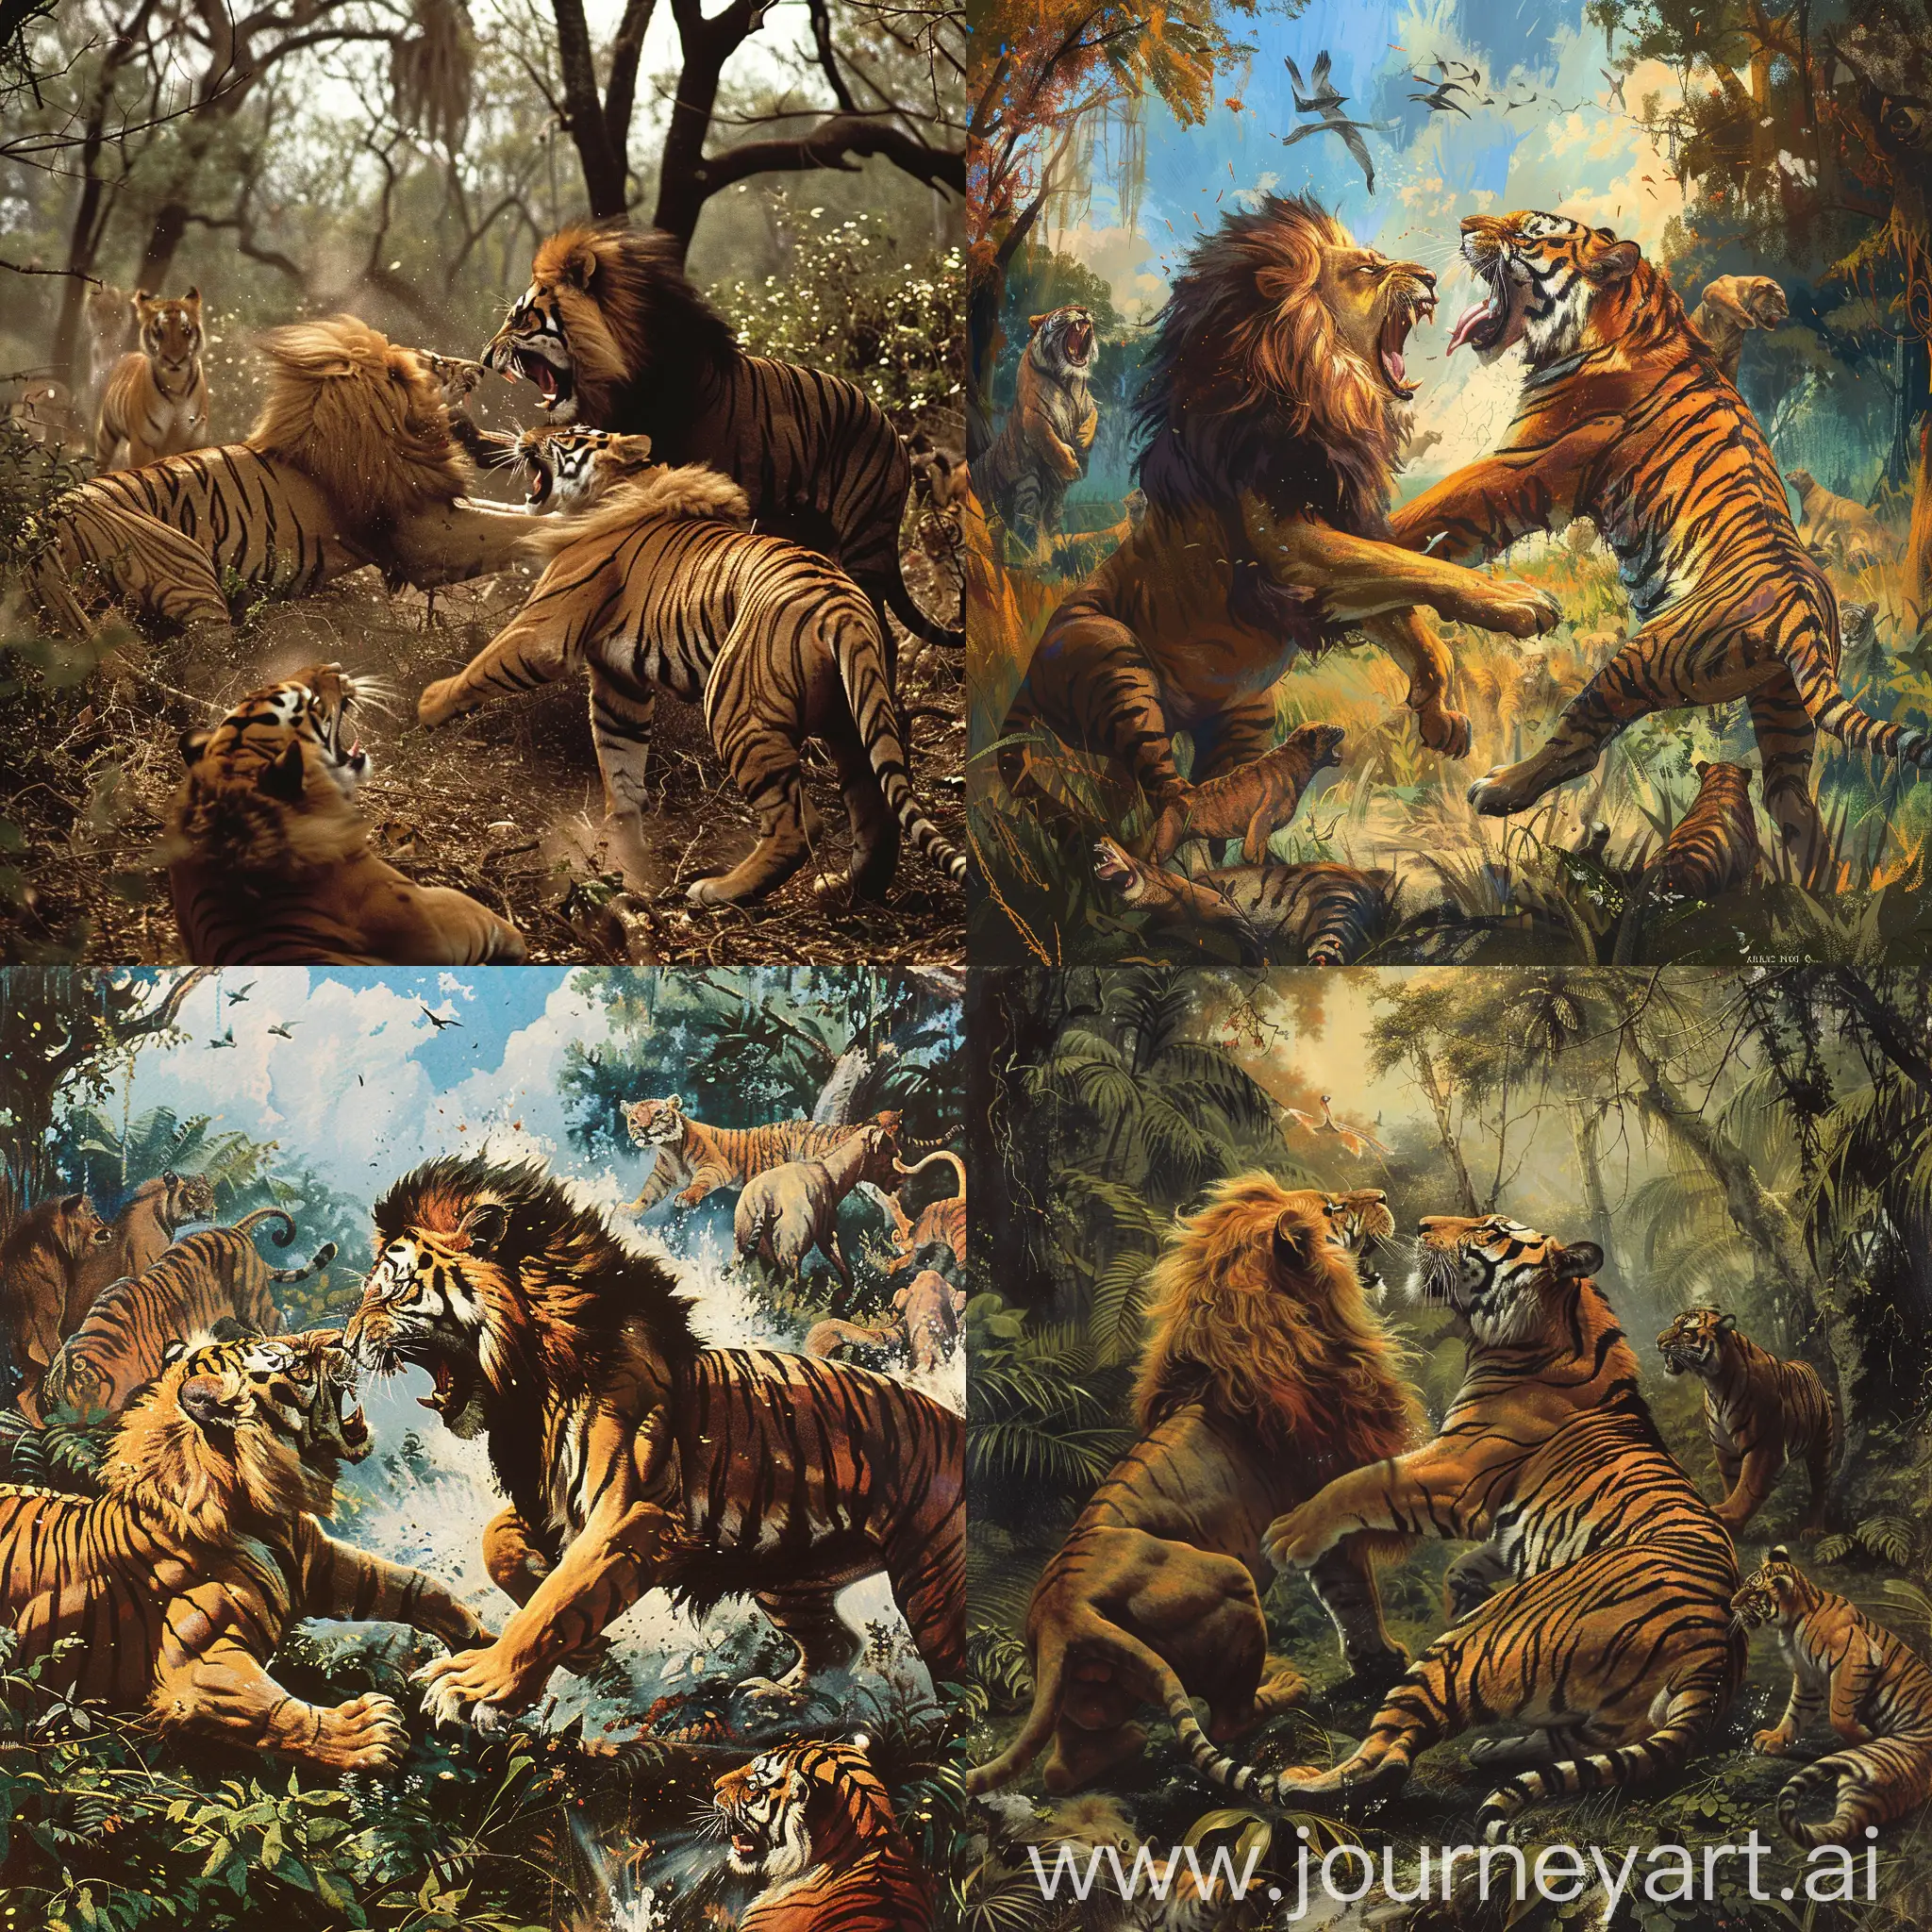 Intense-Jungle-Battle-Lion-vs-Tiger-Clash-Amidst-Captivated-Onlookers